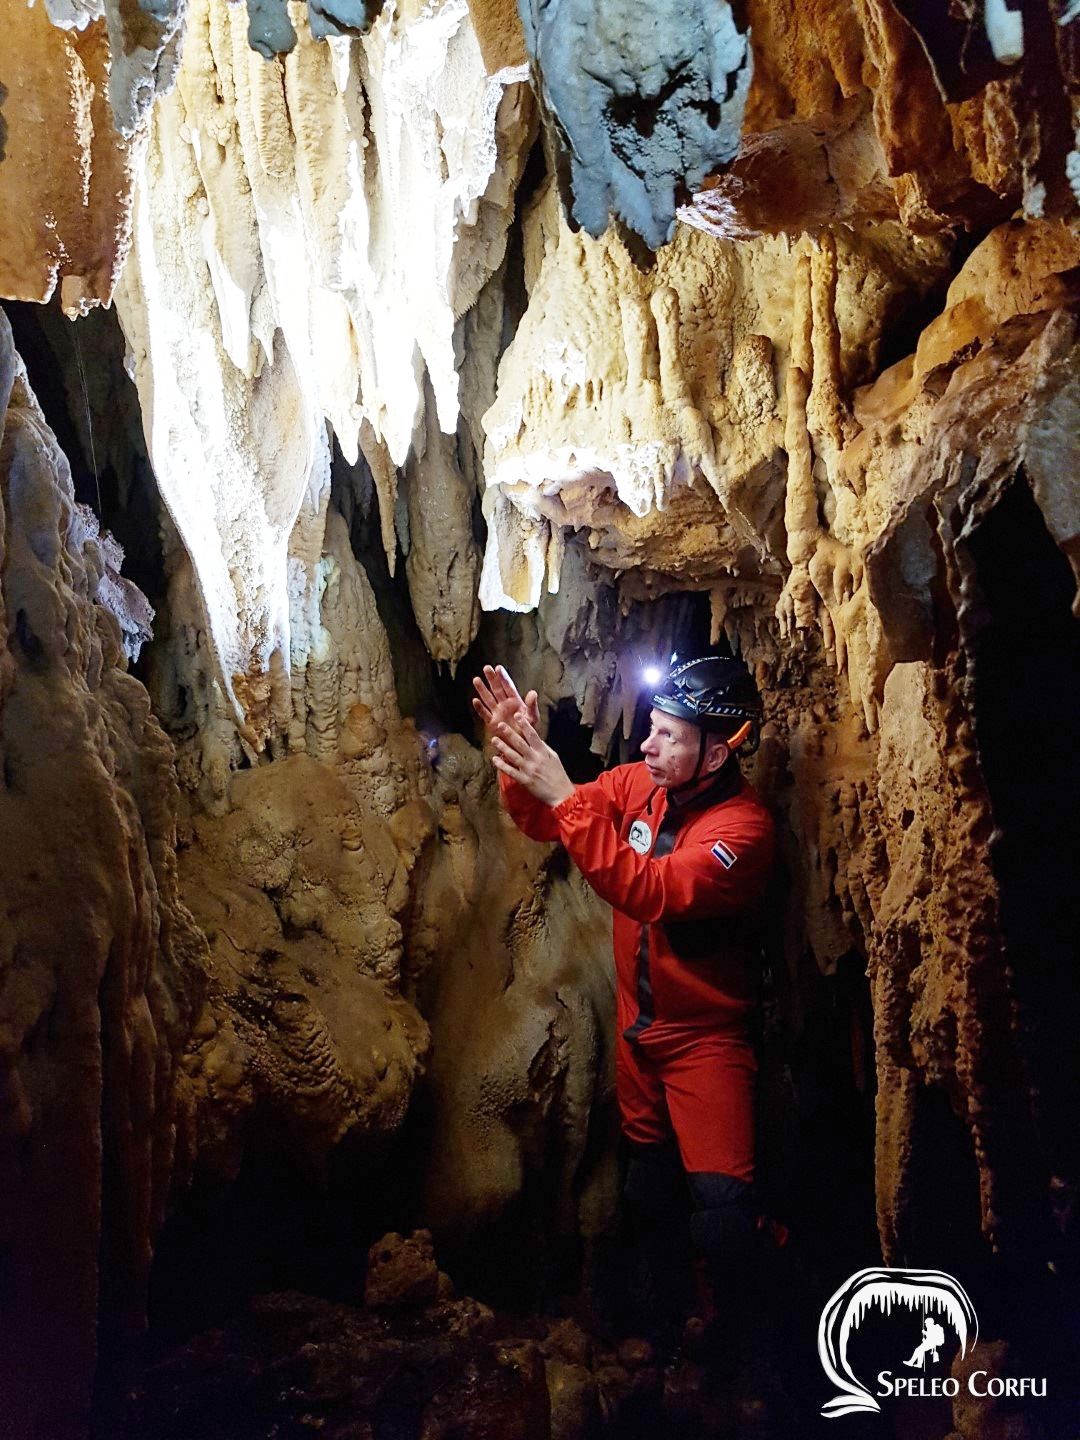 Dutch speleologist and caver René van Vliet explores unknown Corfu cave